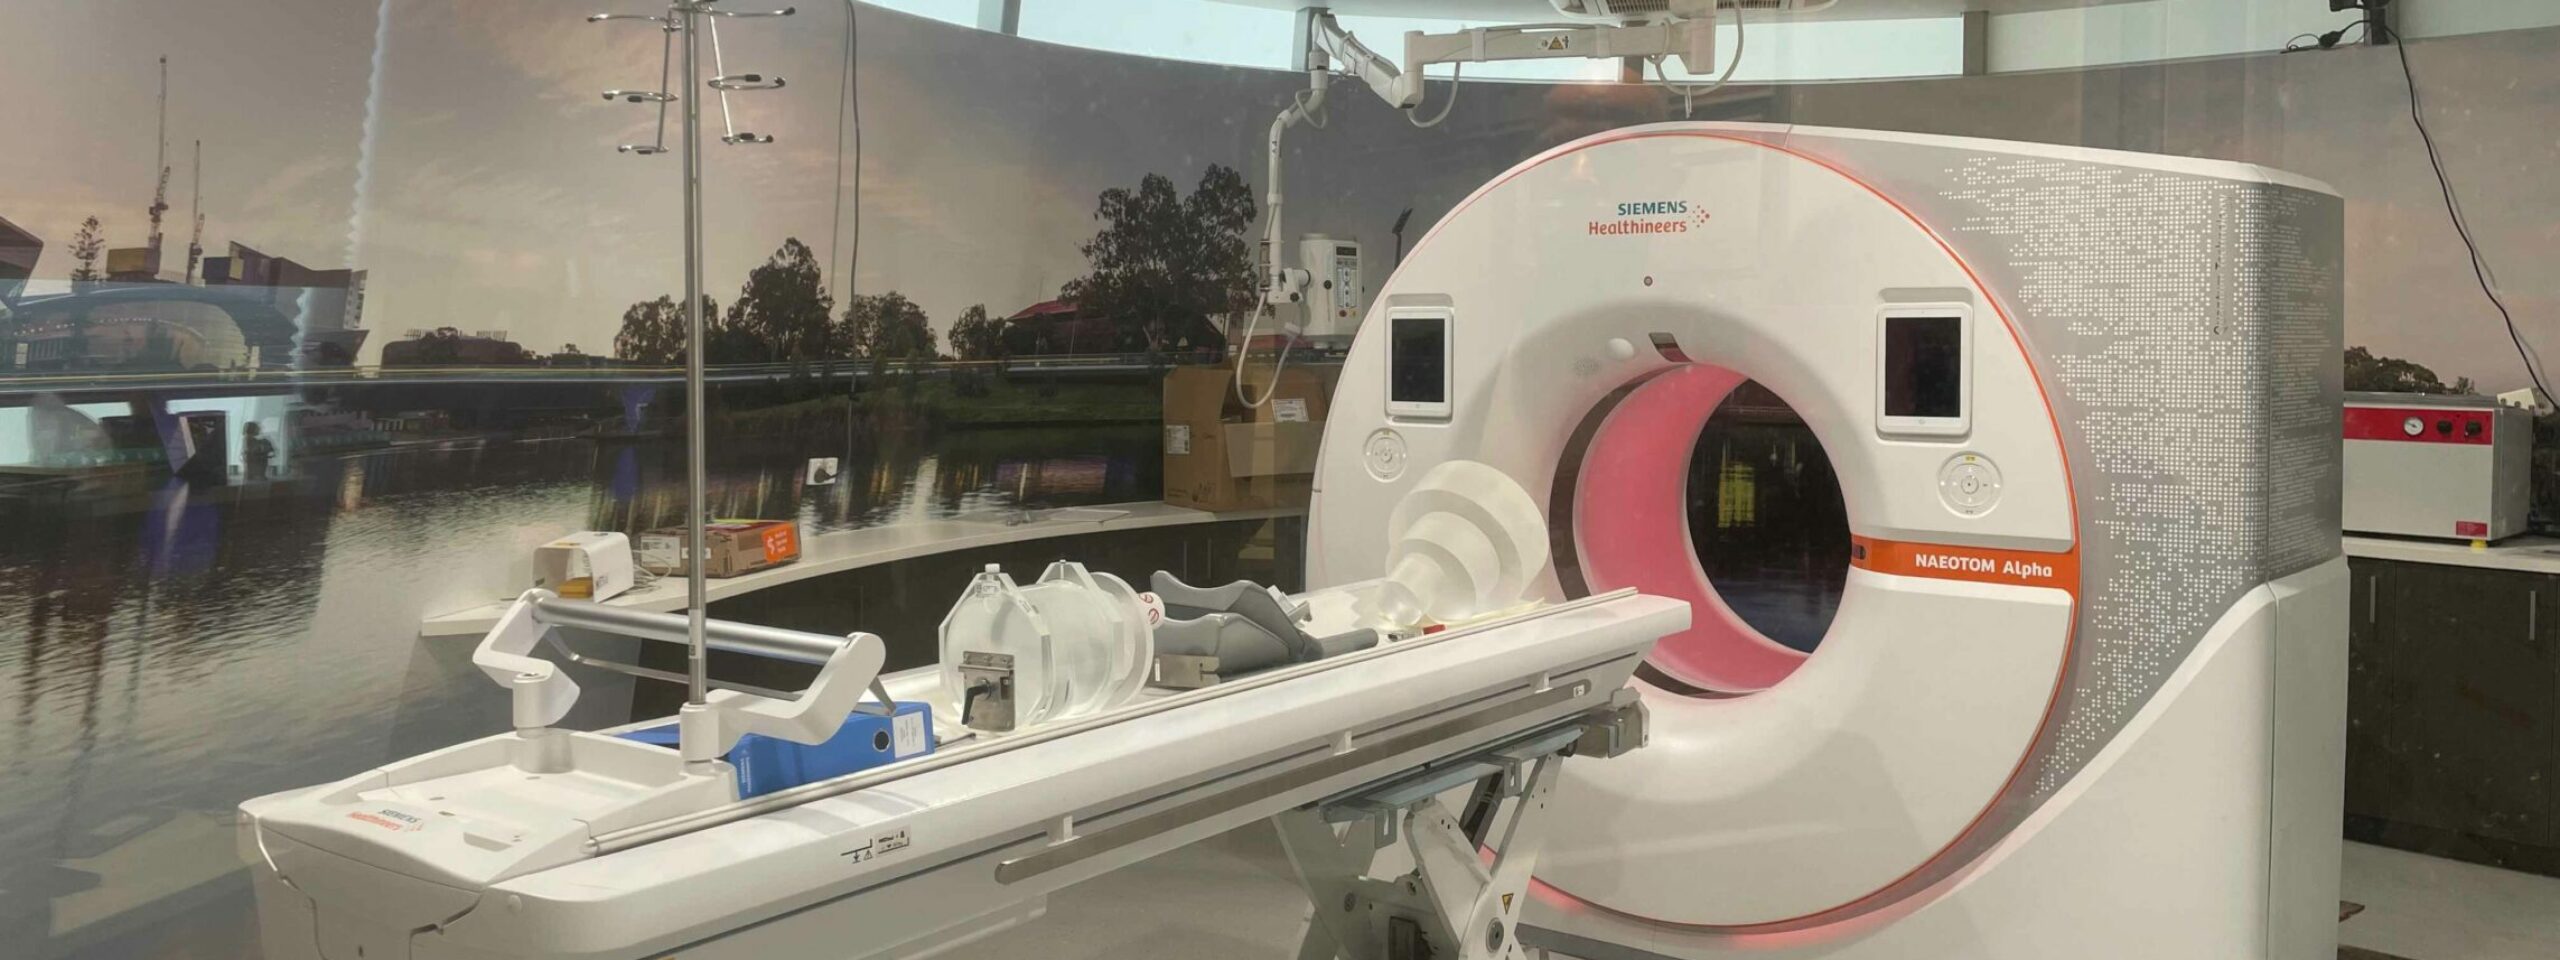 Photon Counting CT scanner inside Jones Radiology clinic room at SAHMRI